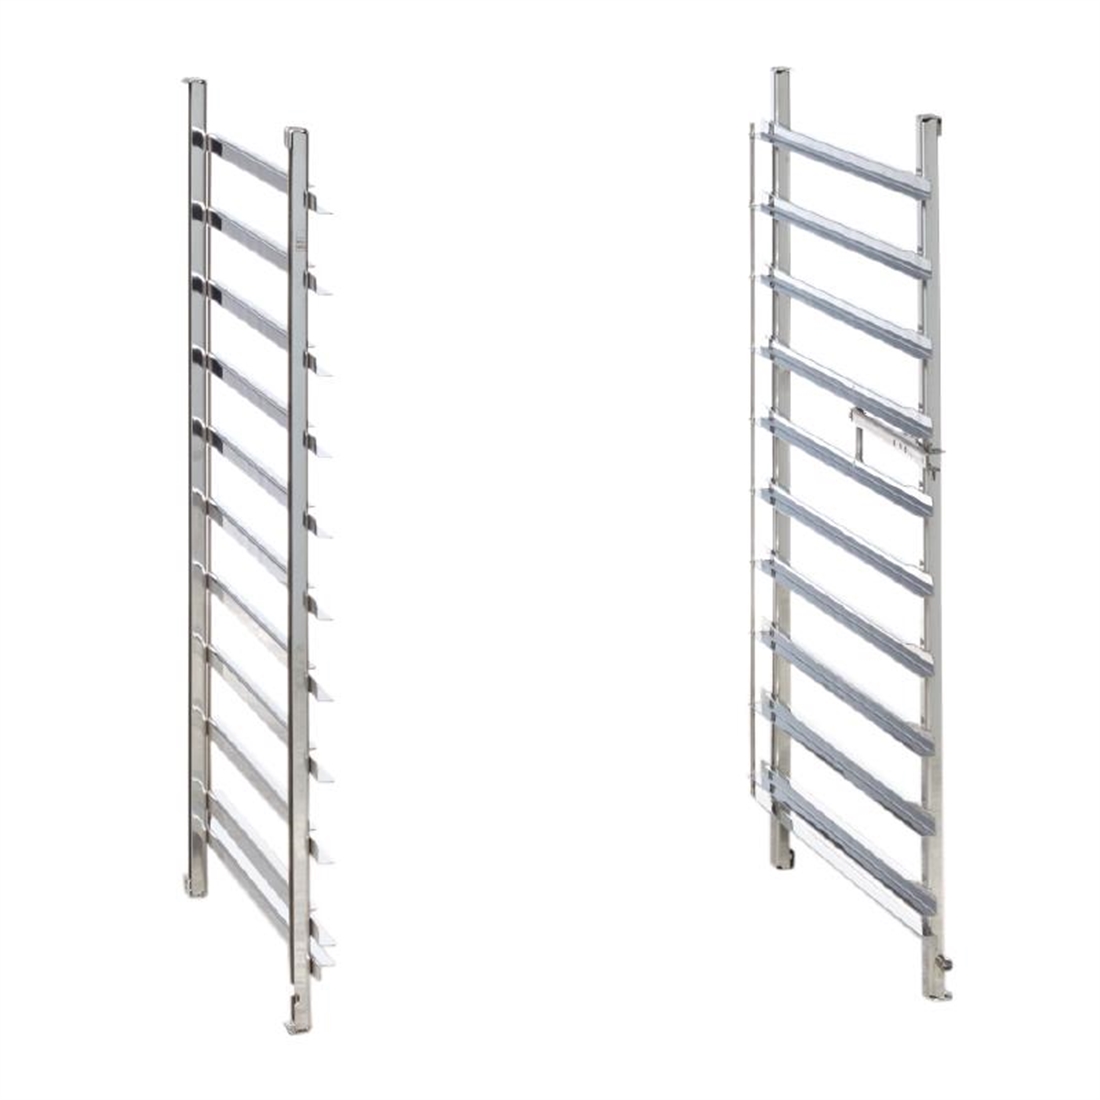 Rational 5 rack (85mm) grid shelves - Ref 60.61.269